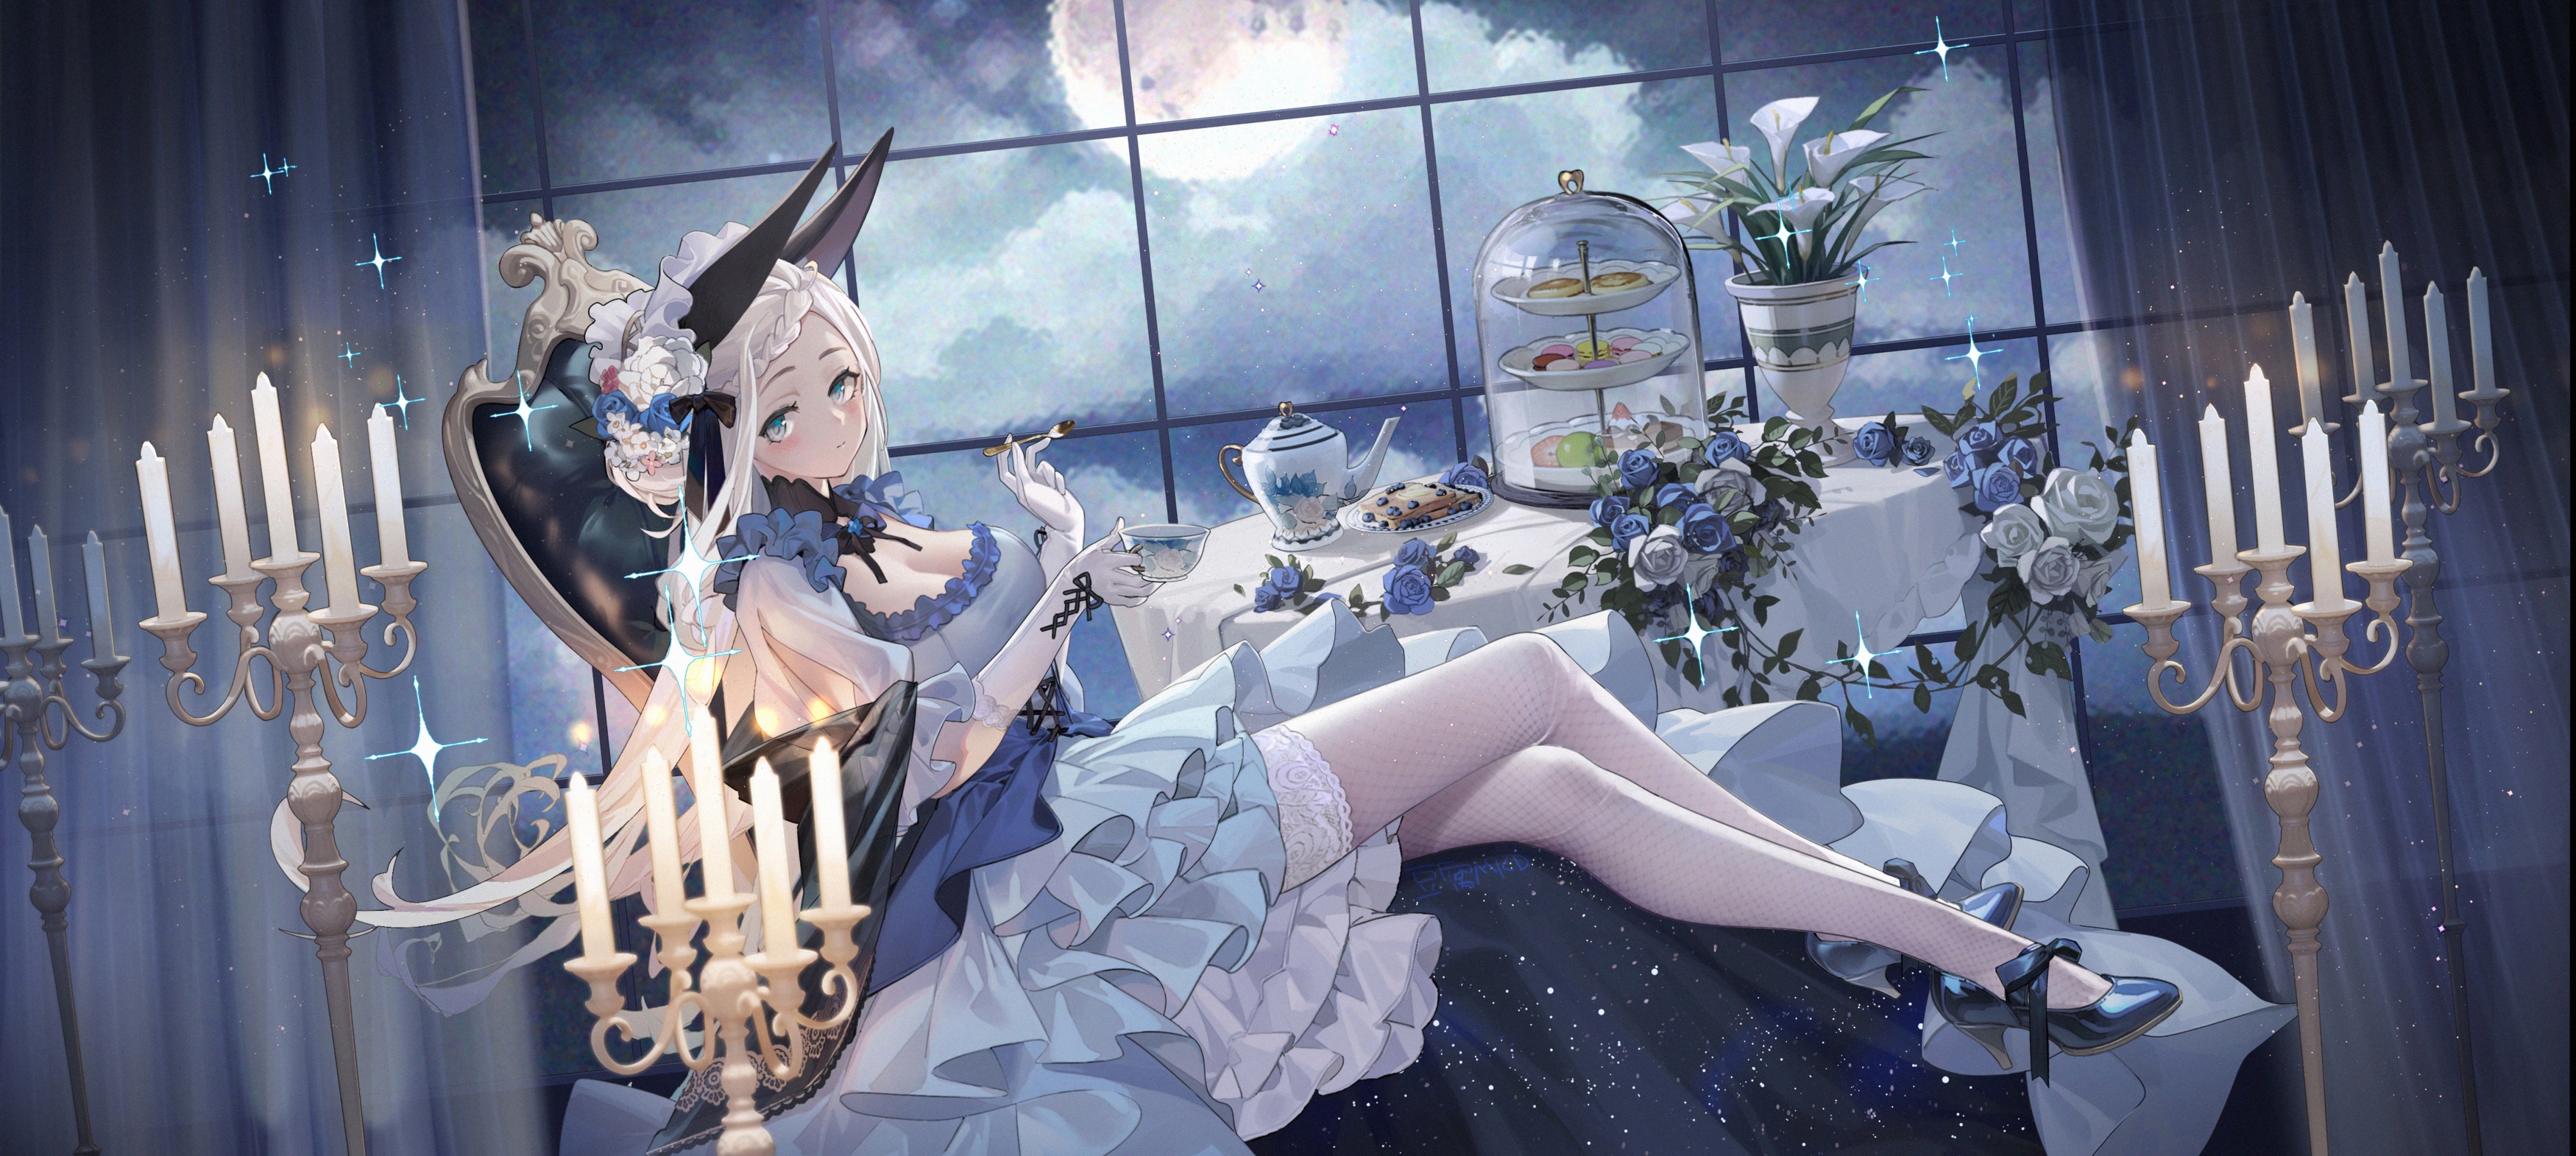 Anime Anime Girls Dress Legs Crossed Candles Looking At Viewer Window Moon Sky Clouds Long Hair Glov 3500x1570